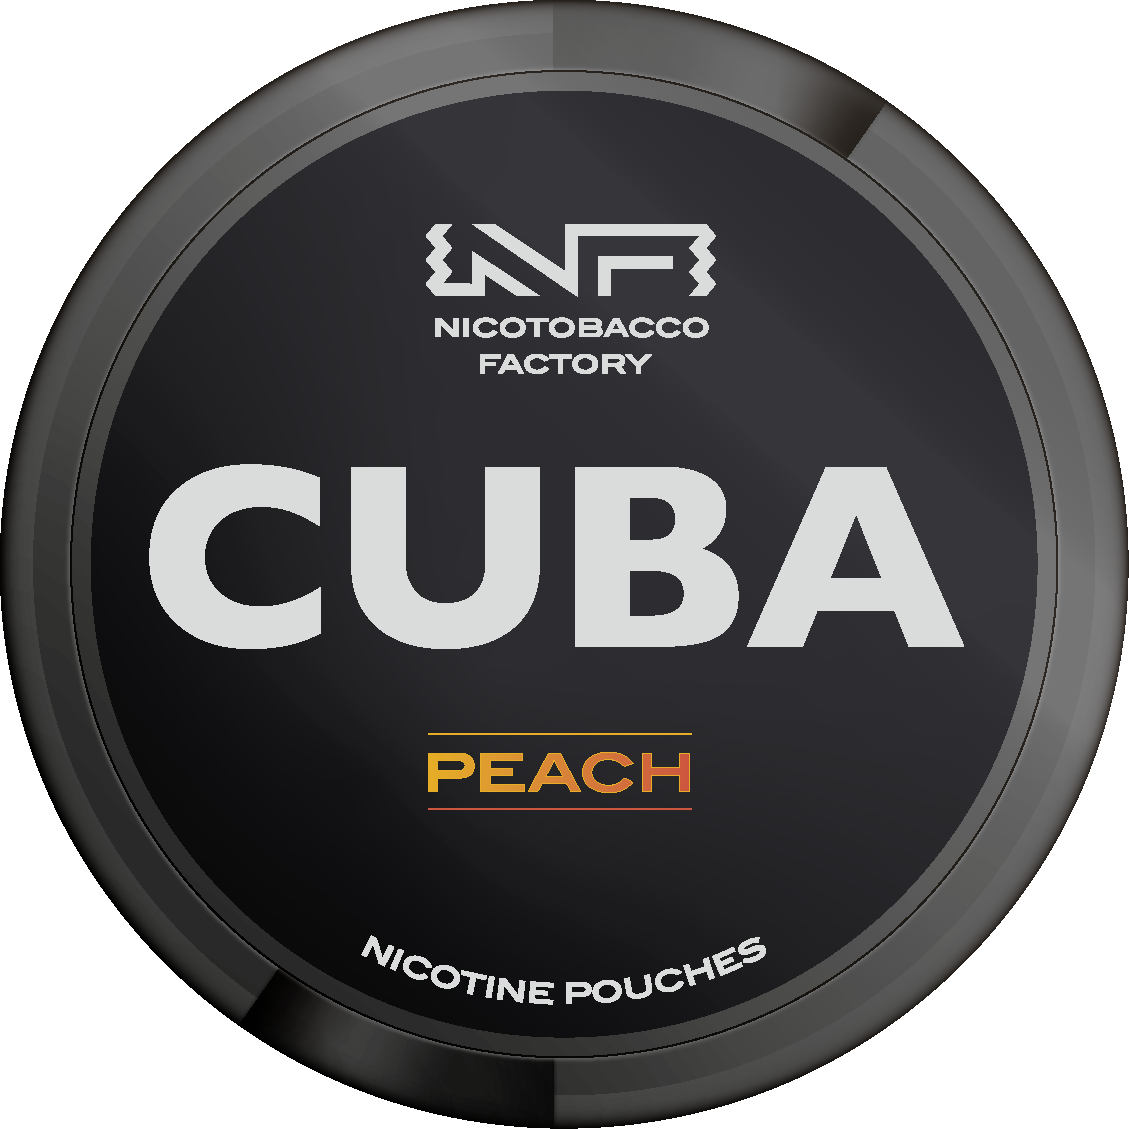 Black Peach Nicotine Pouches By Cuba